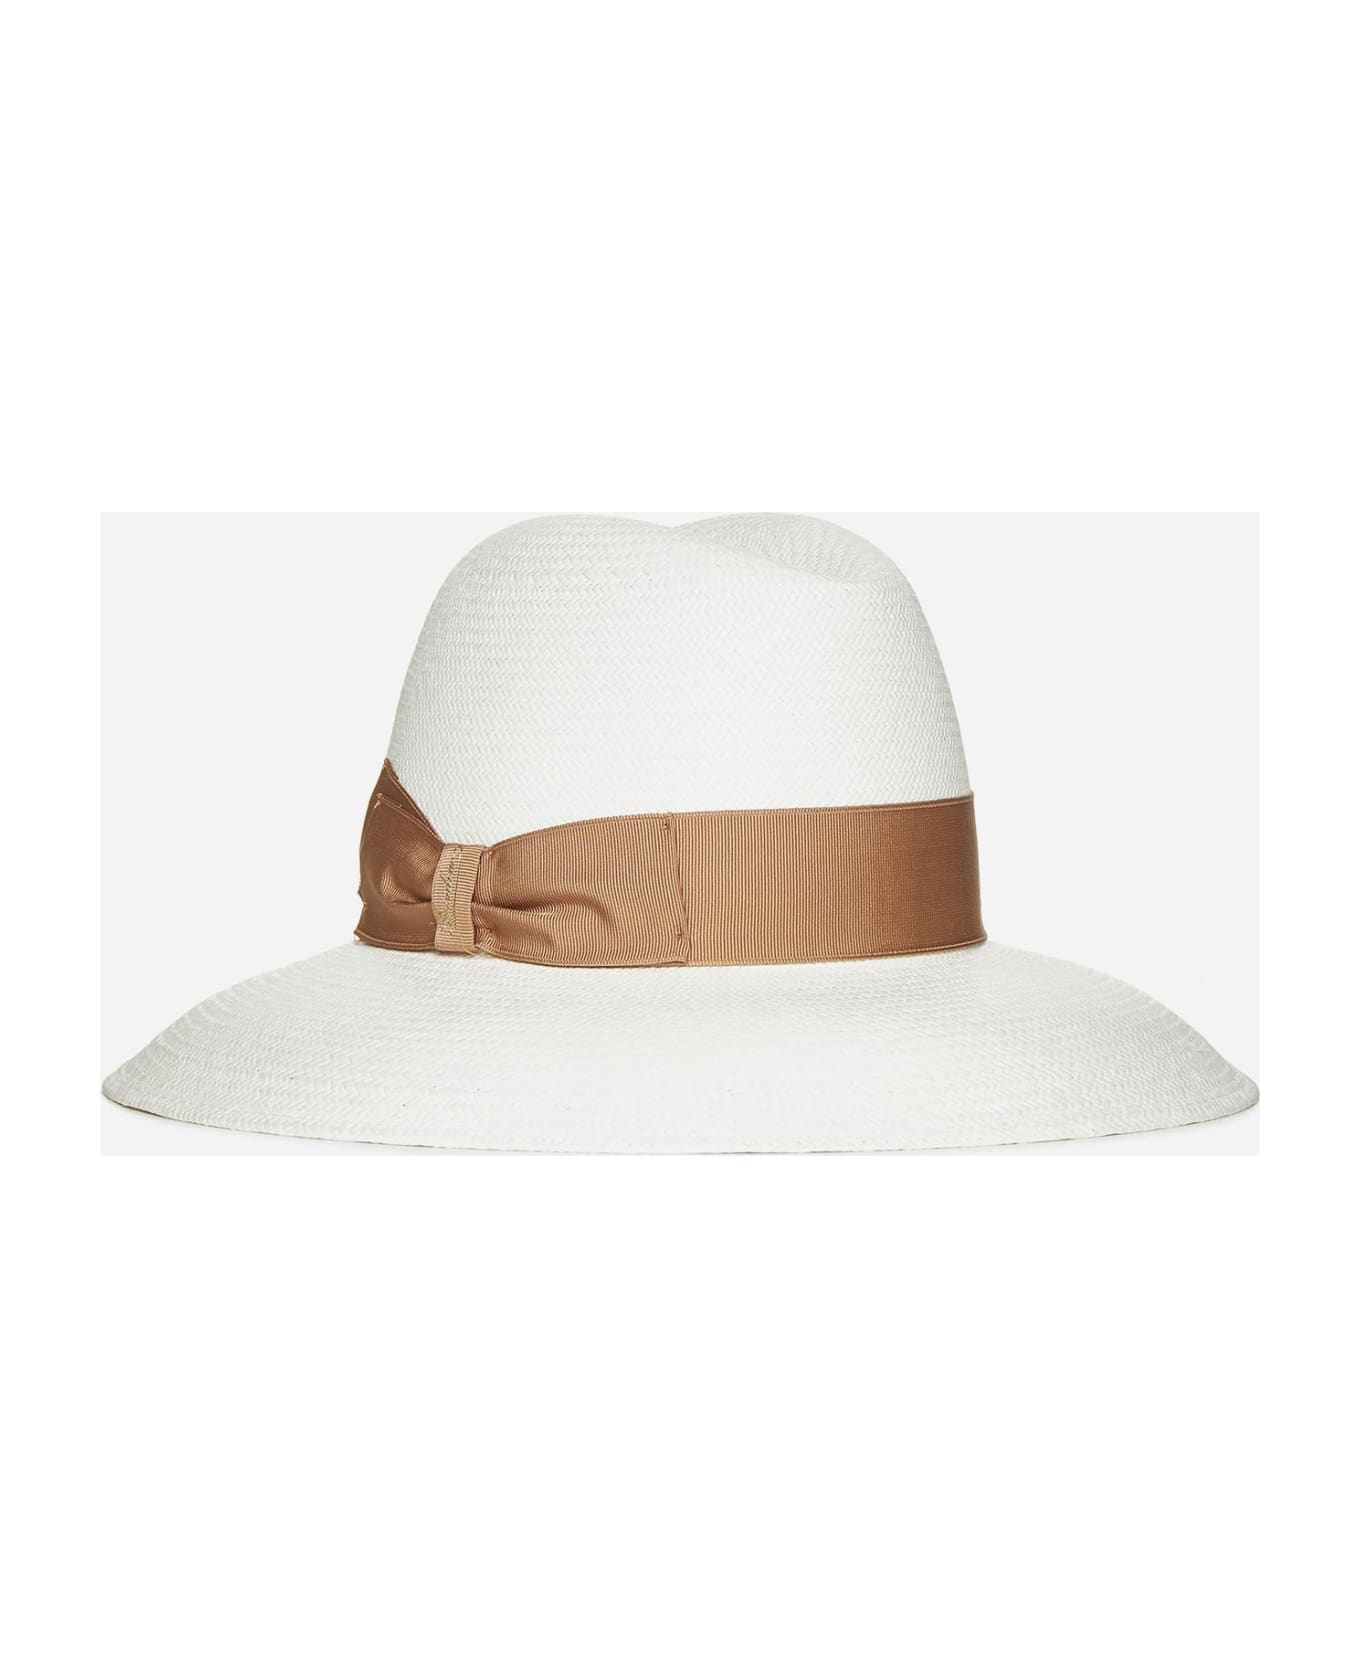 Borsalino Caludette Large Brim Panama Hat - Beige